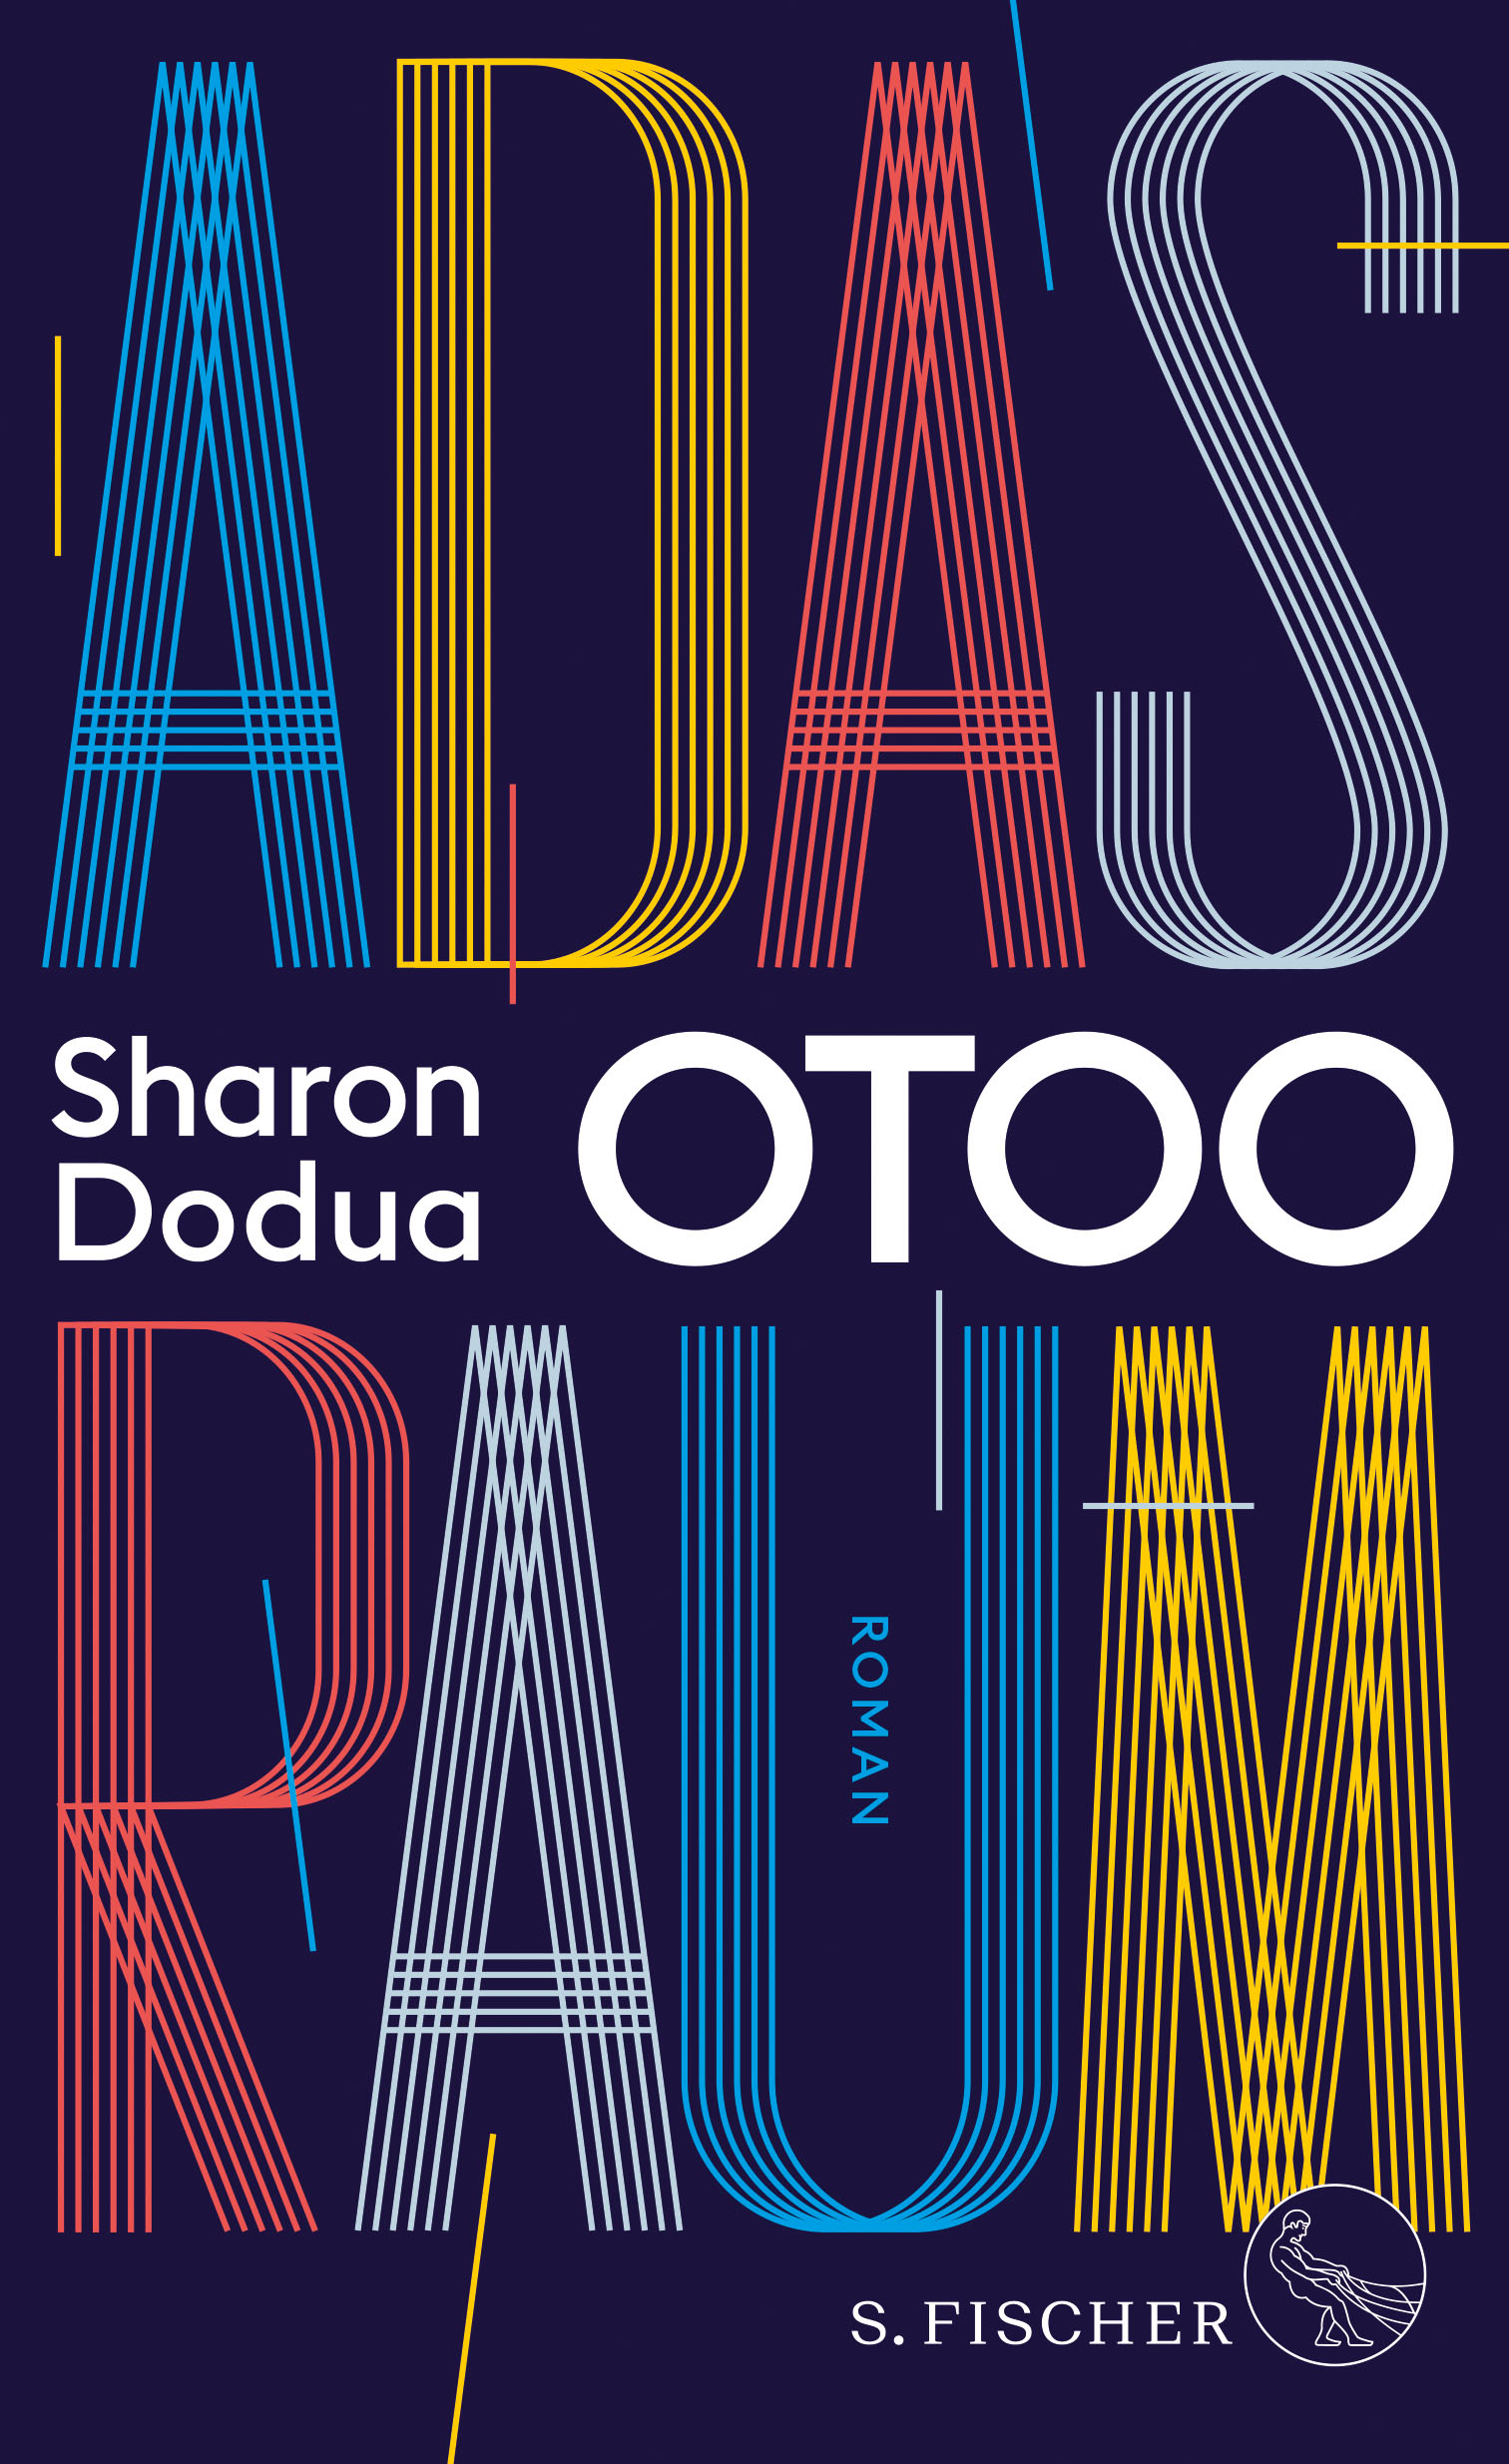 Book cover of "Adas Raum"